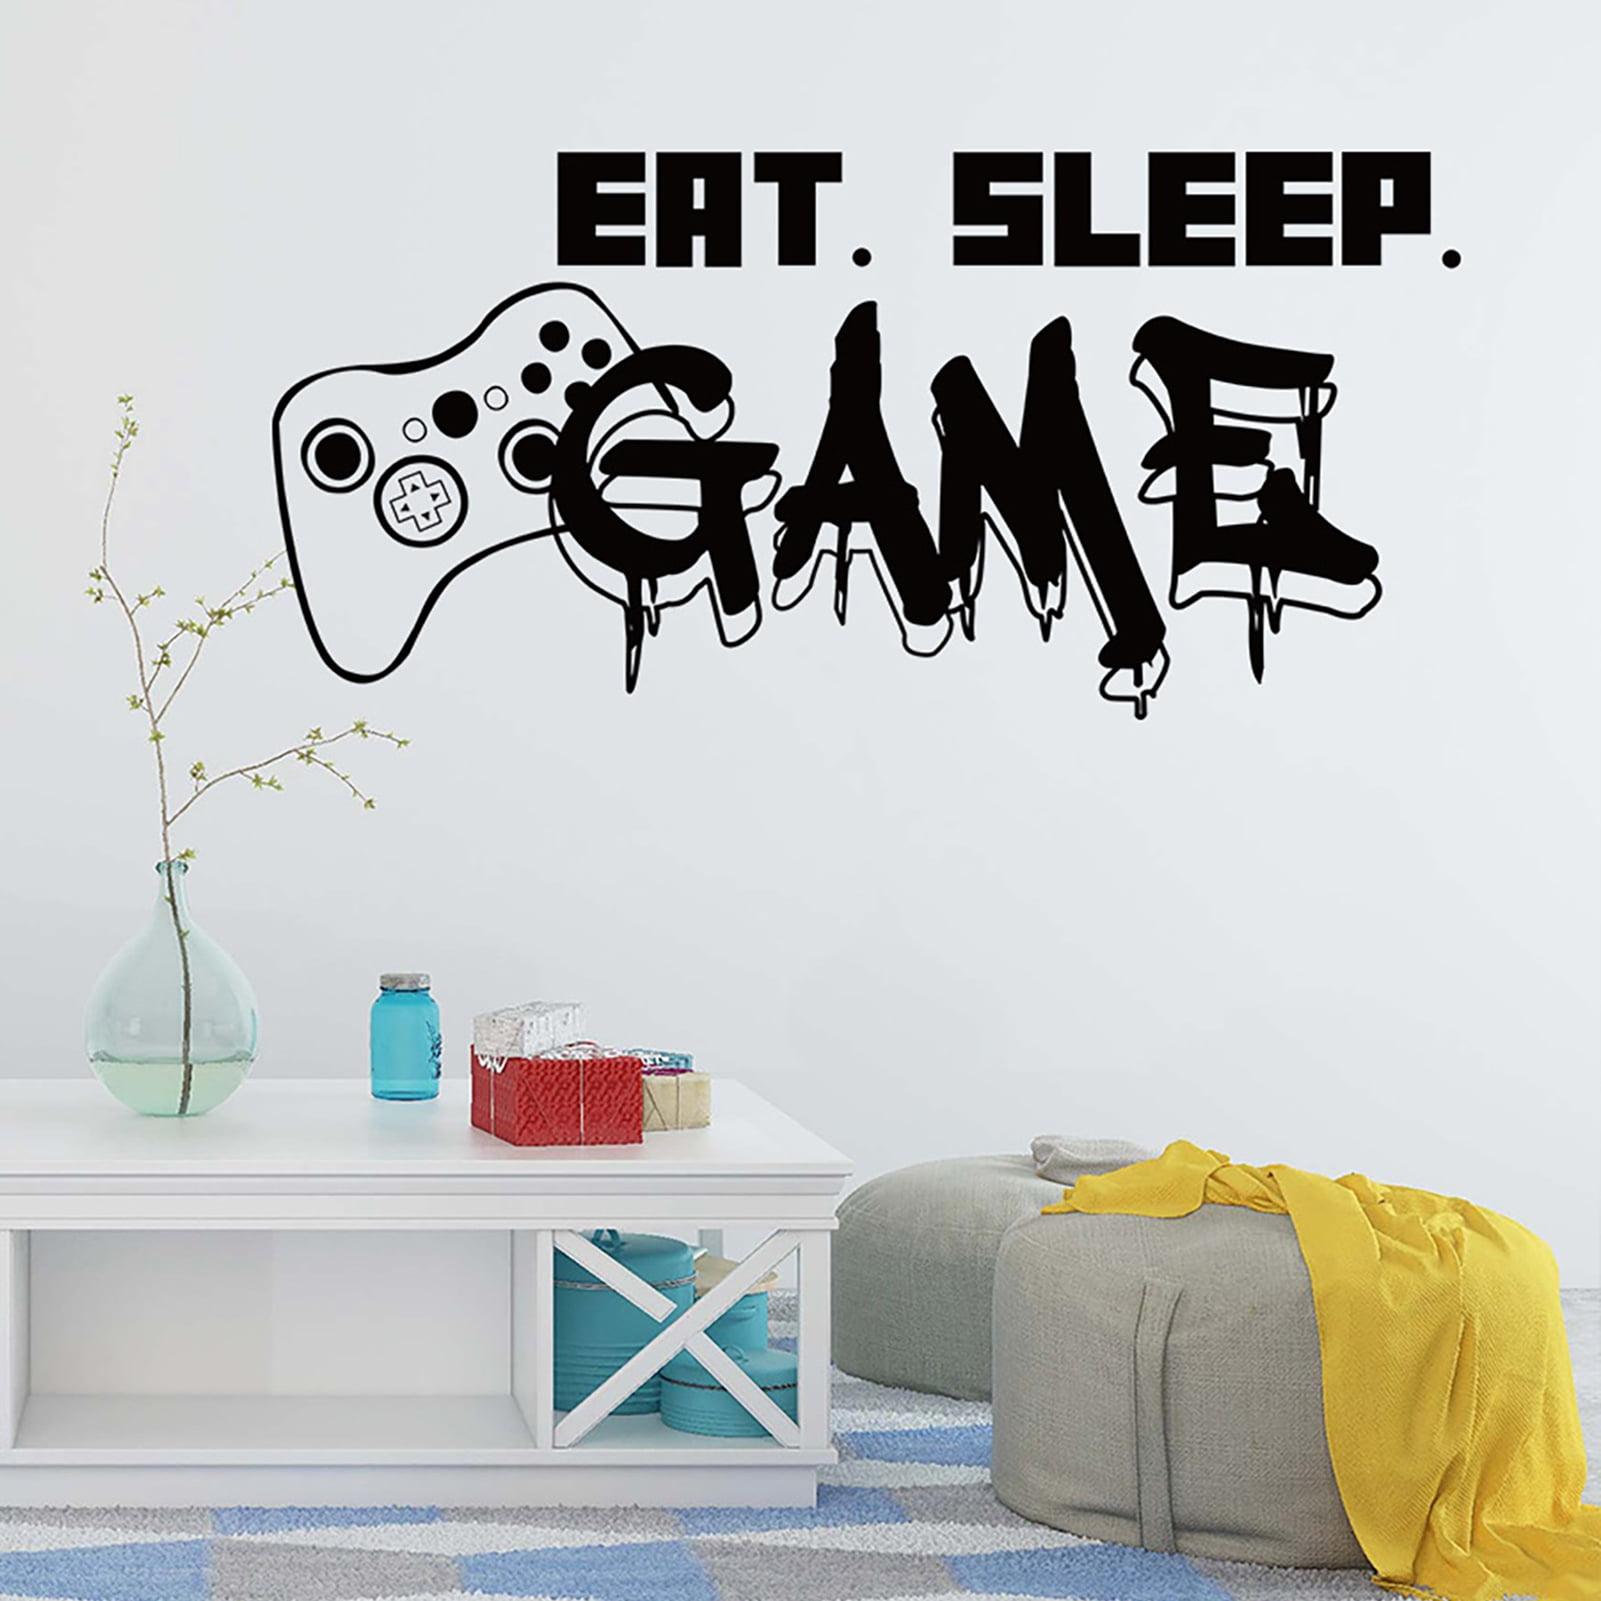 Gamer wall sticker target Gaming sticker art decal mural boys room